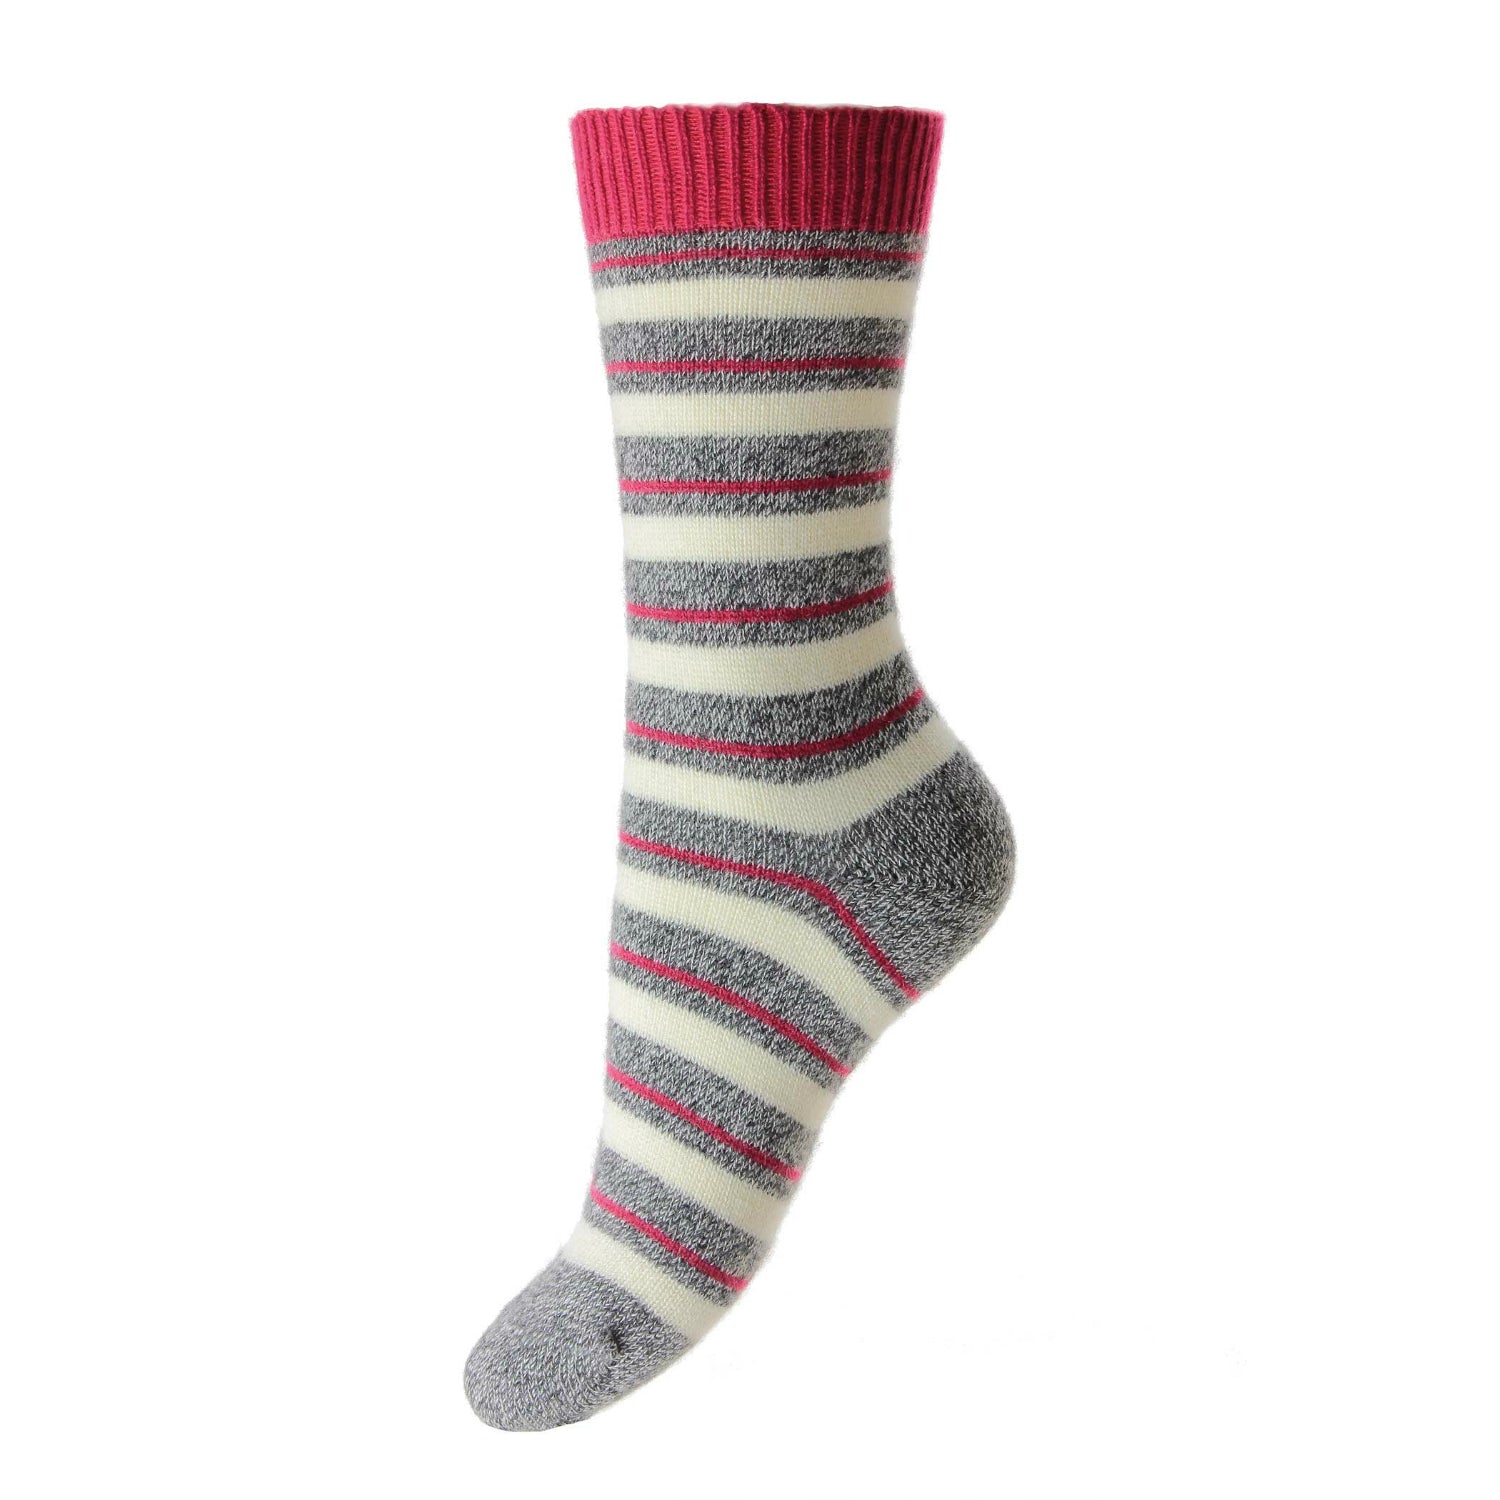 Cashmere Socks - The Cashmere Choice